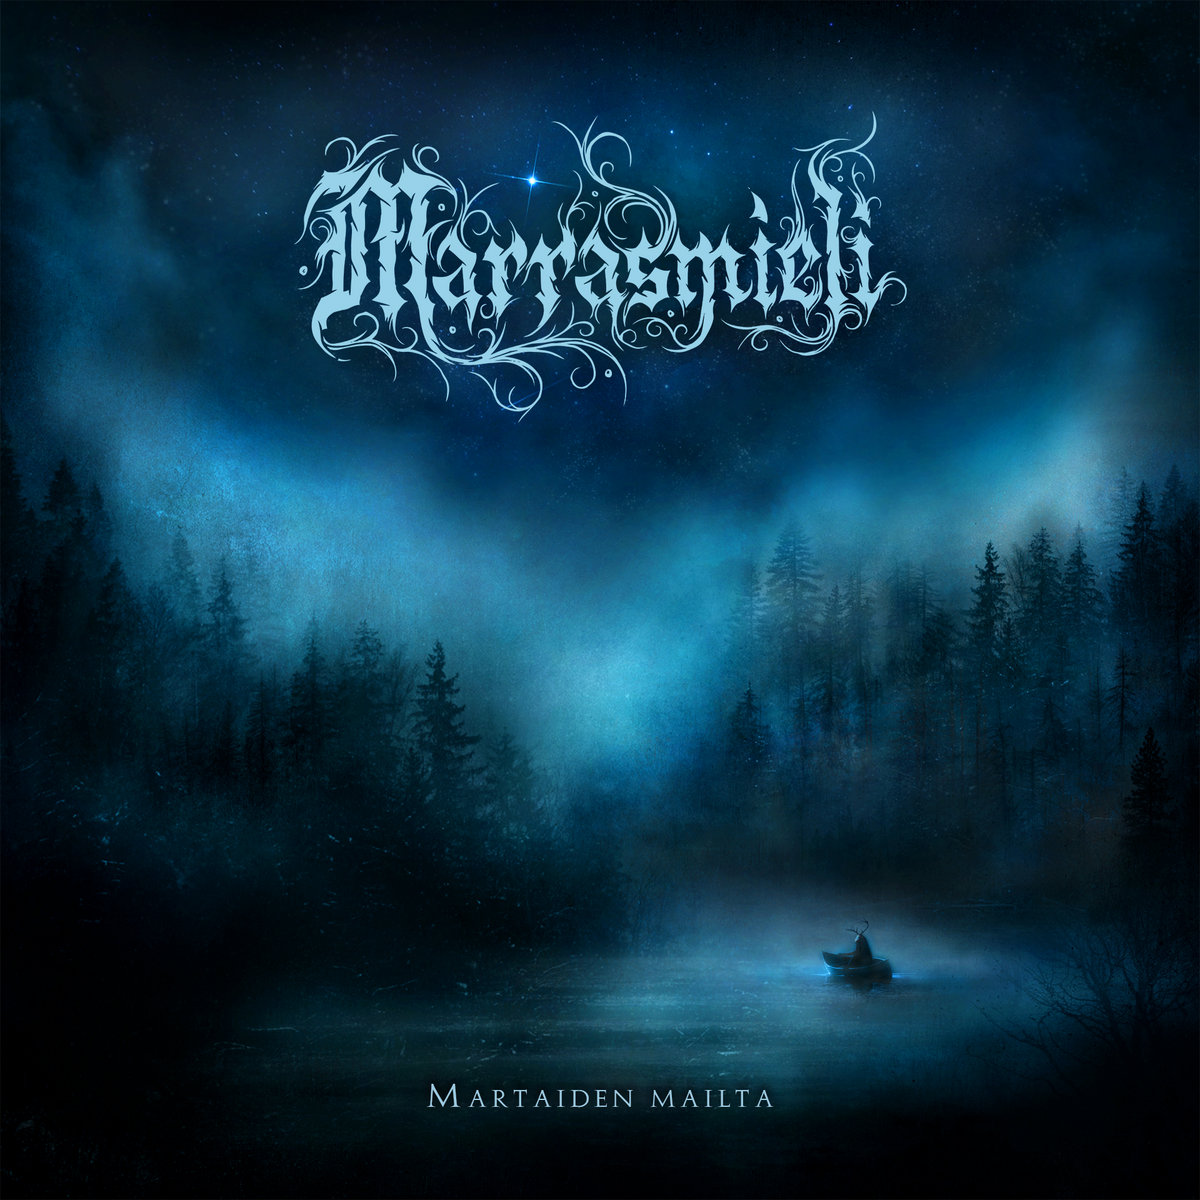 Marrasmieli Martaiden Mailta cover artwork